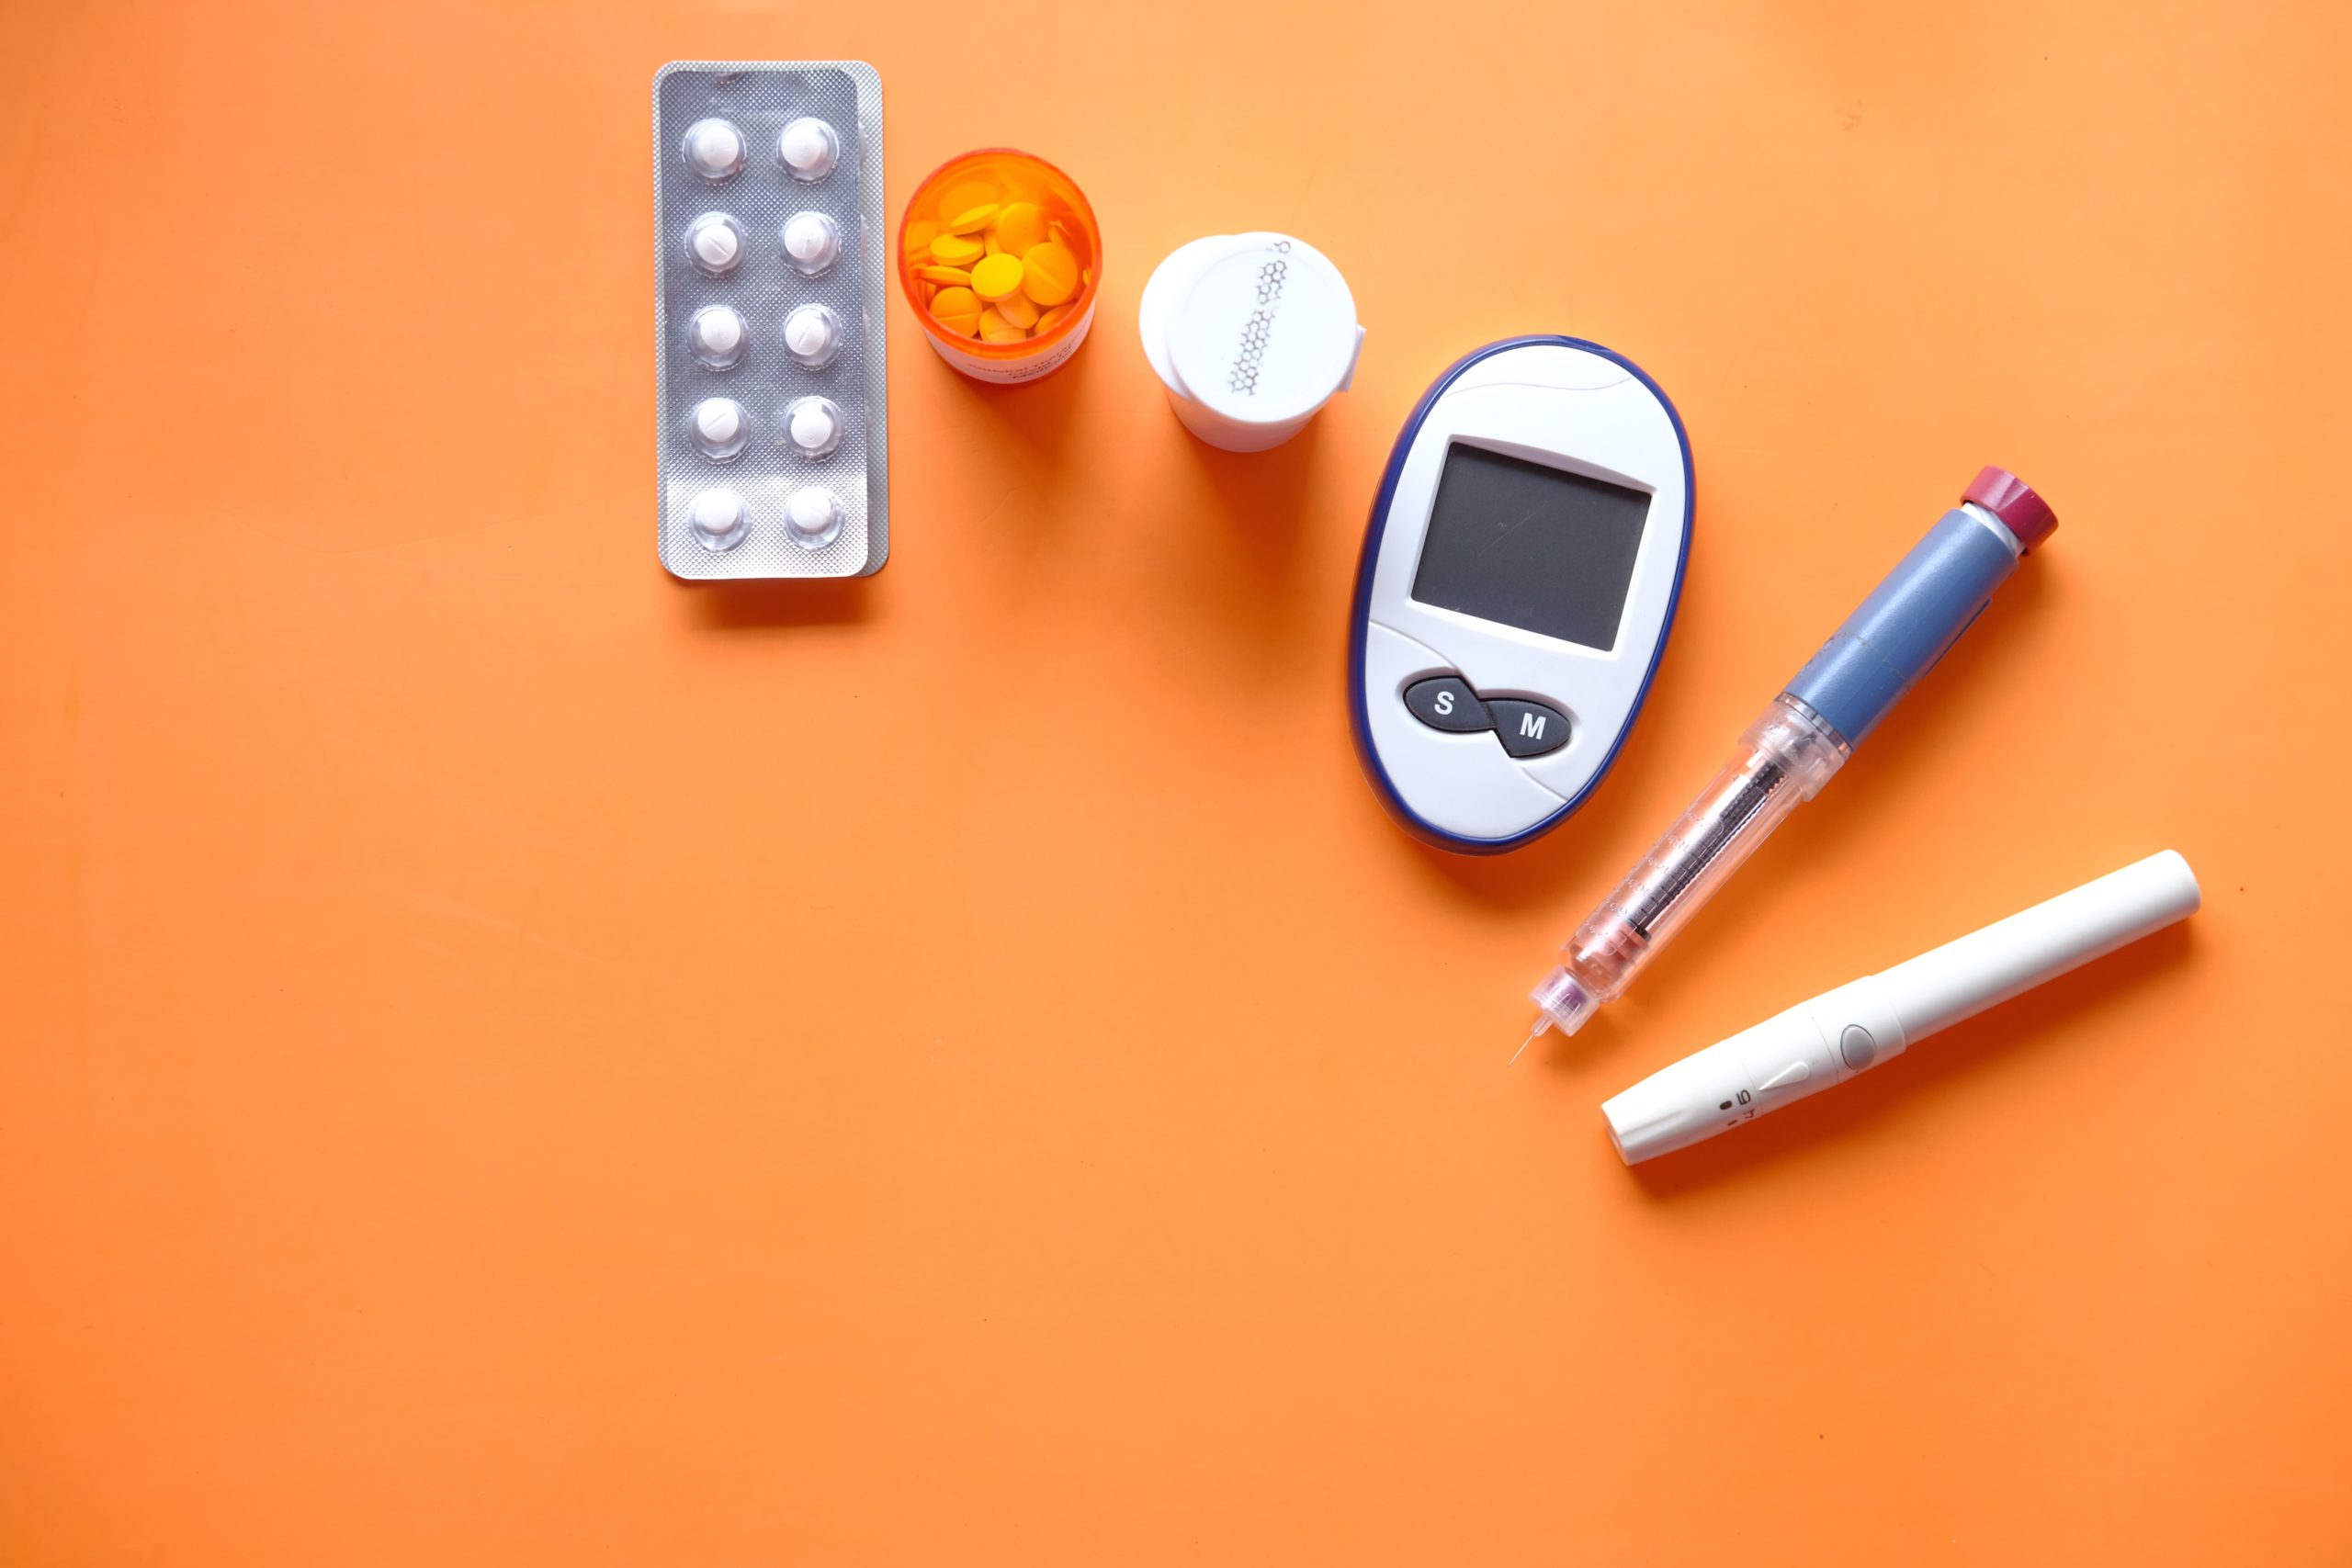 Titelbild: Blutzuckermessgerät und Antidepressiva symbolisieren Komorbidität bei Diabetes